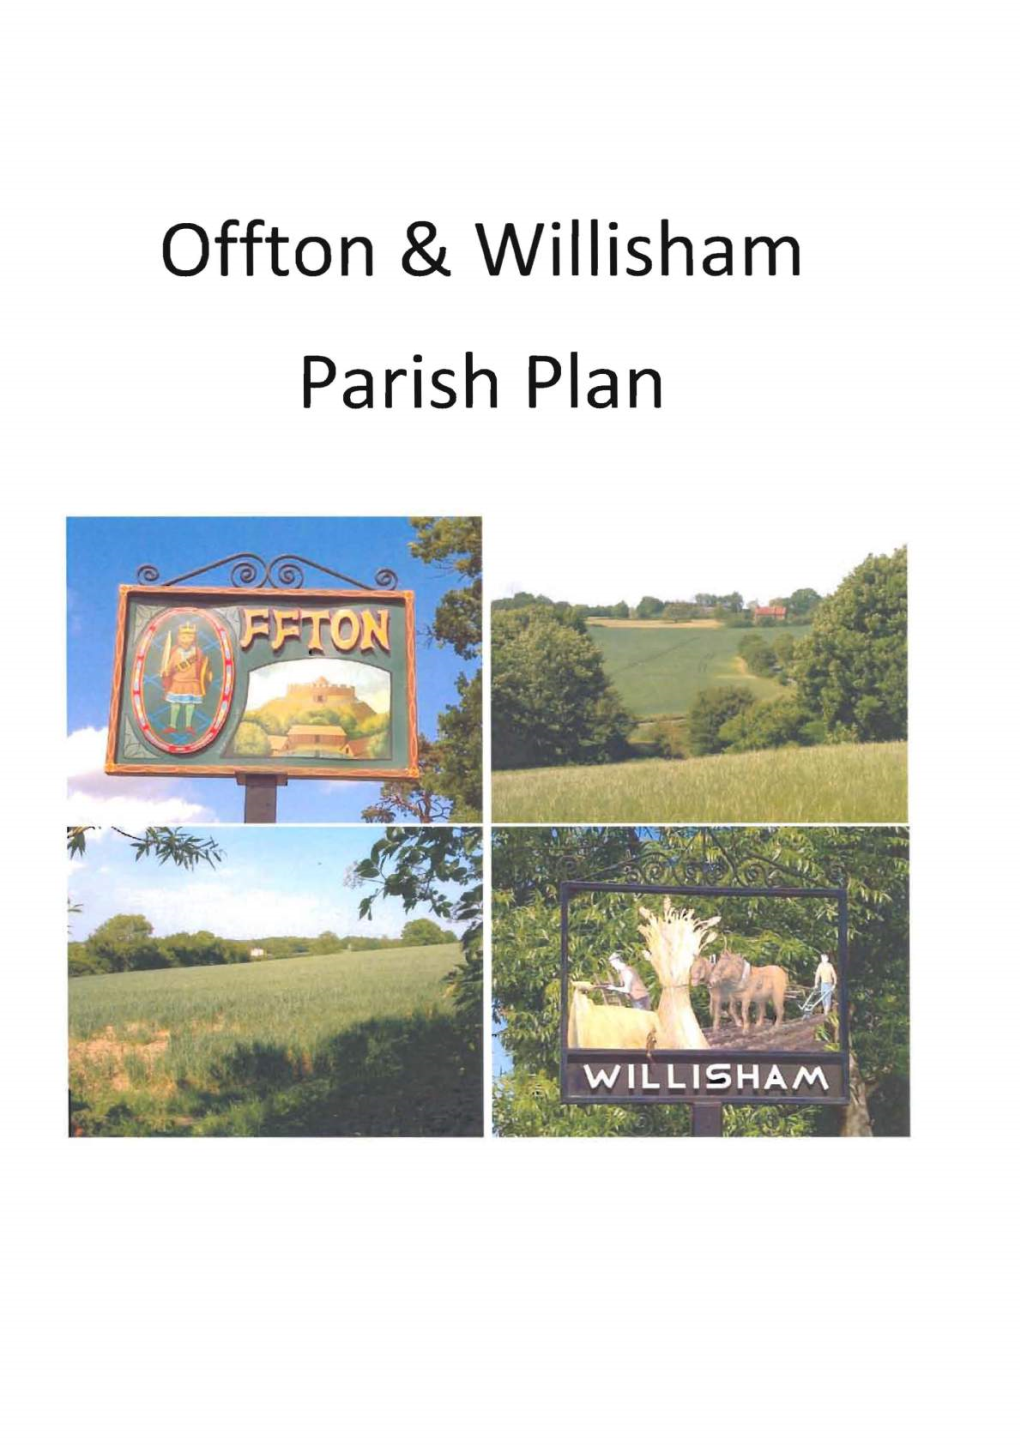 Offton & Willisham Parish Plan 2009